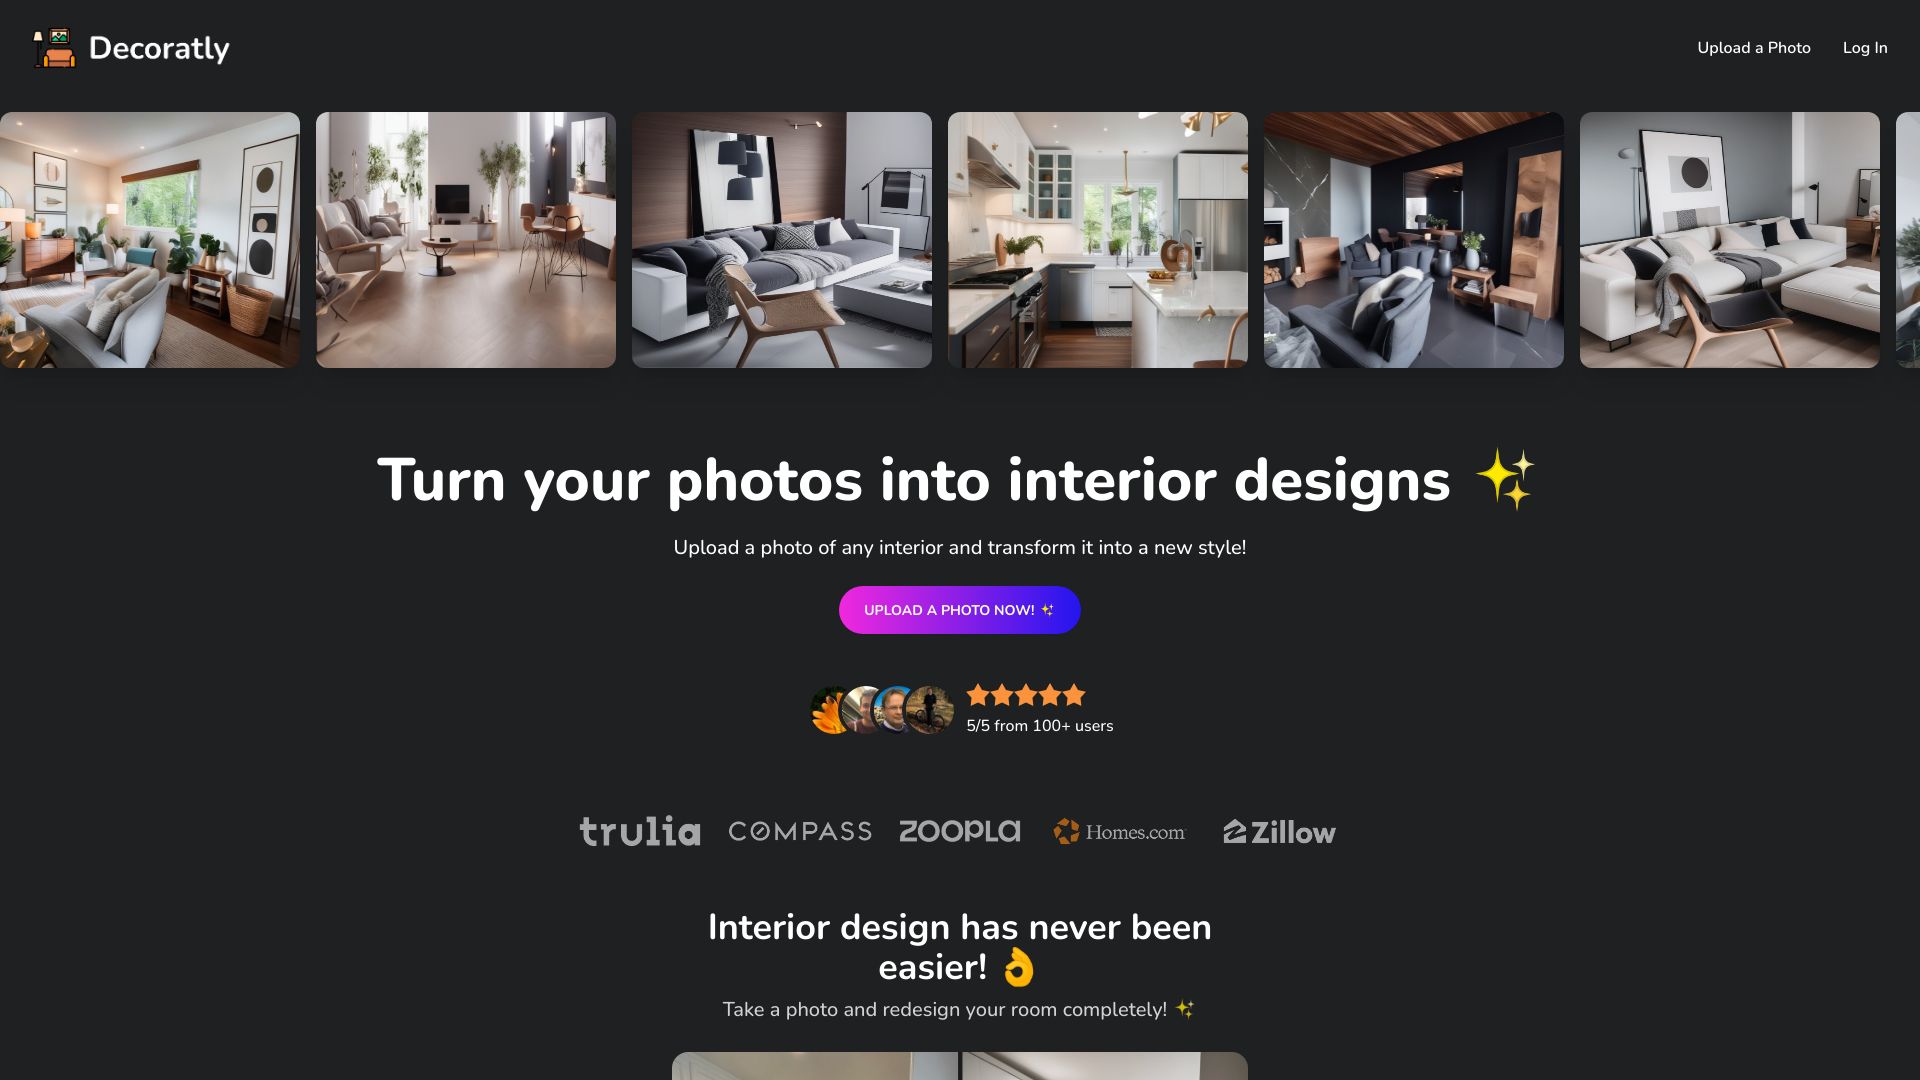 Turn photos into interior design ideas